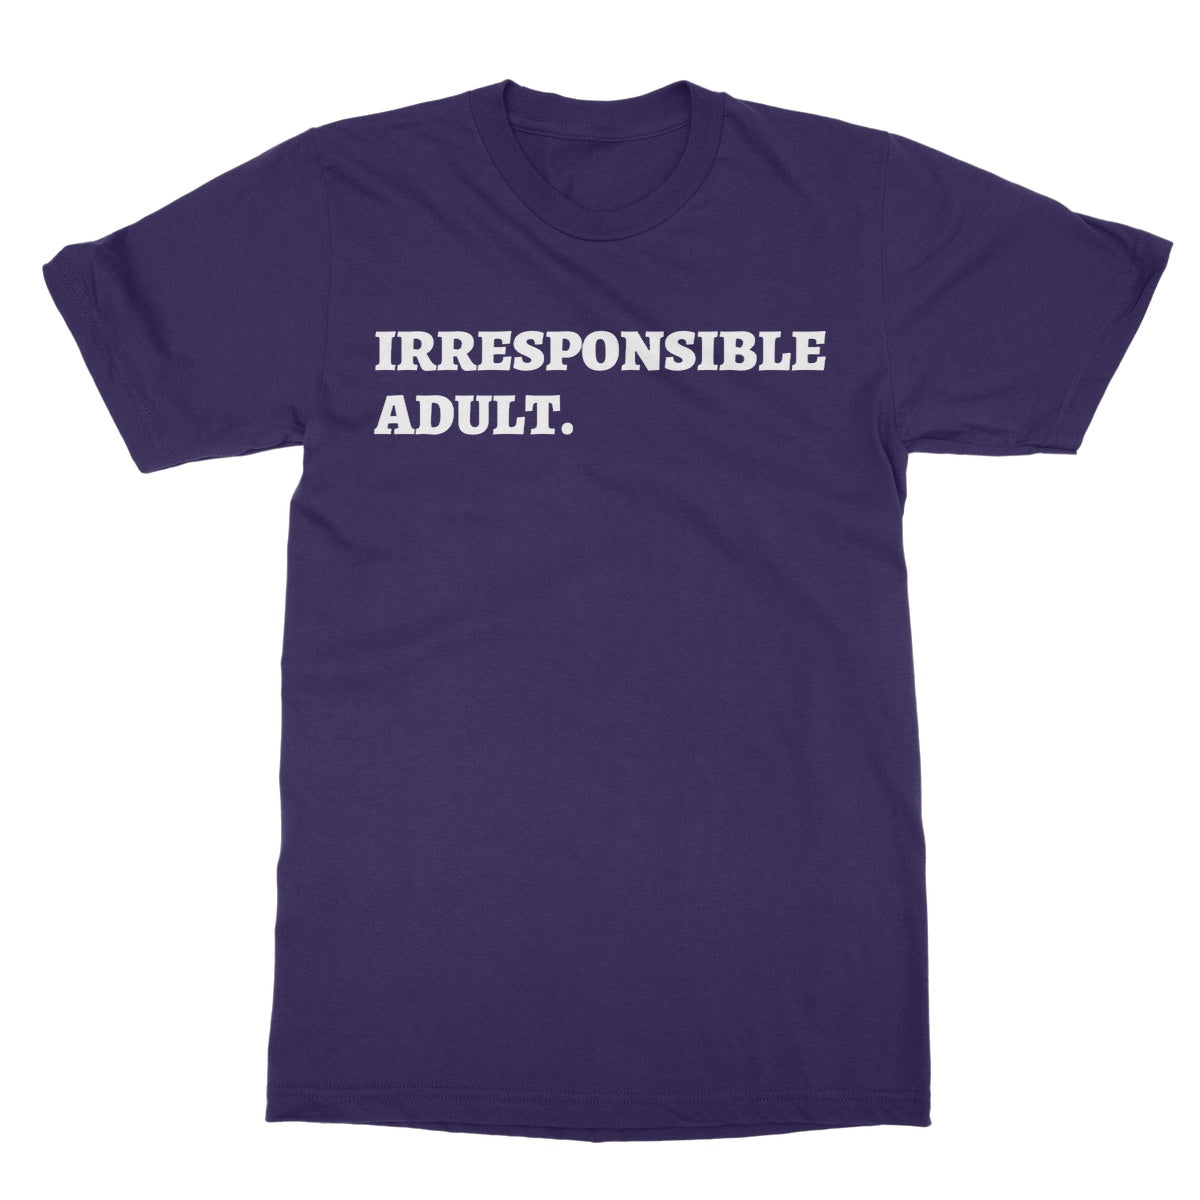 irresponsible adult t shirt purple